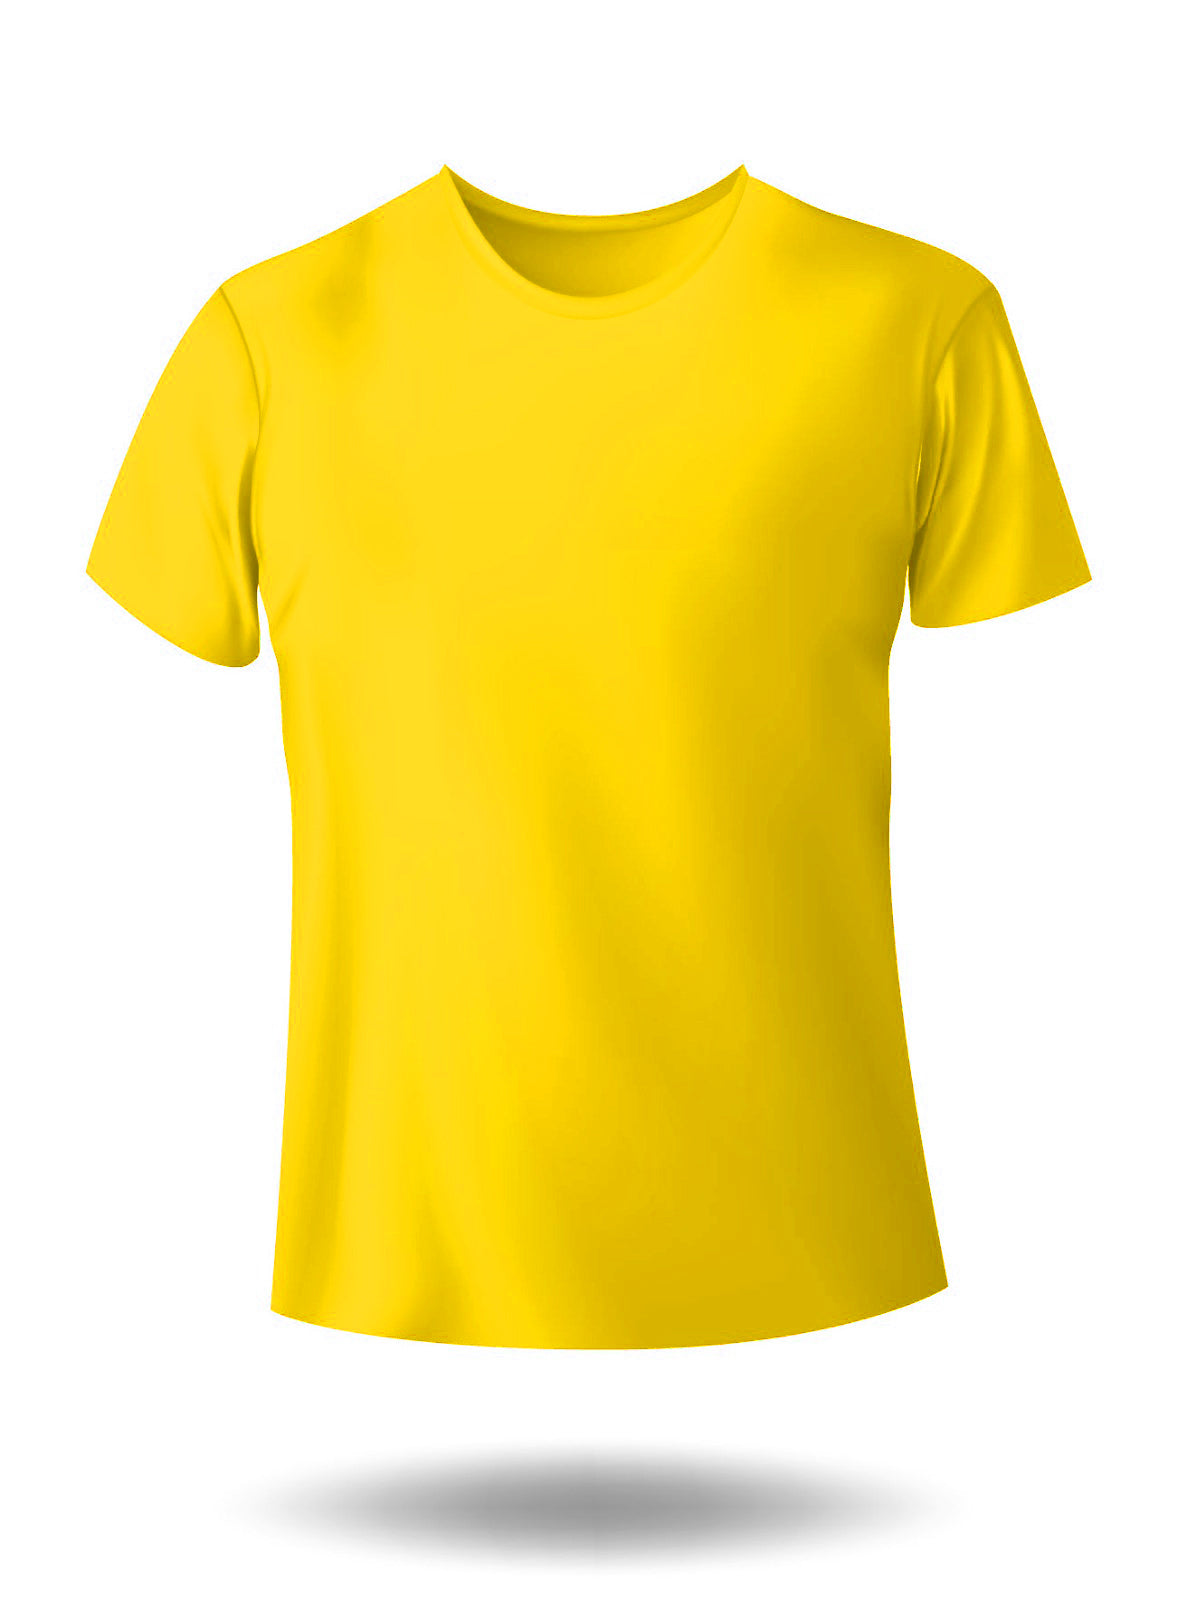 Plain yellow t-shirt for kids.